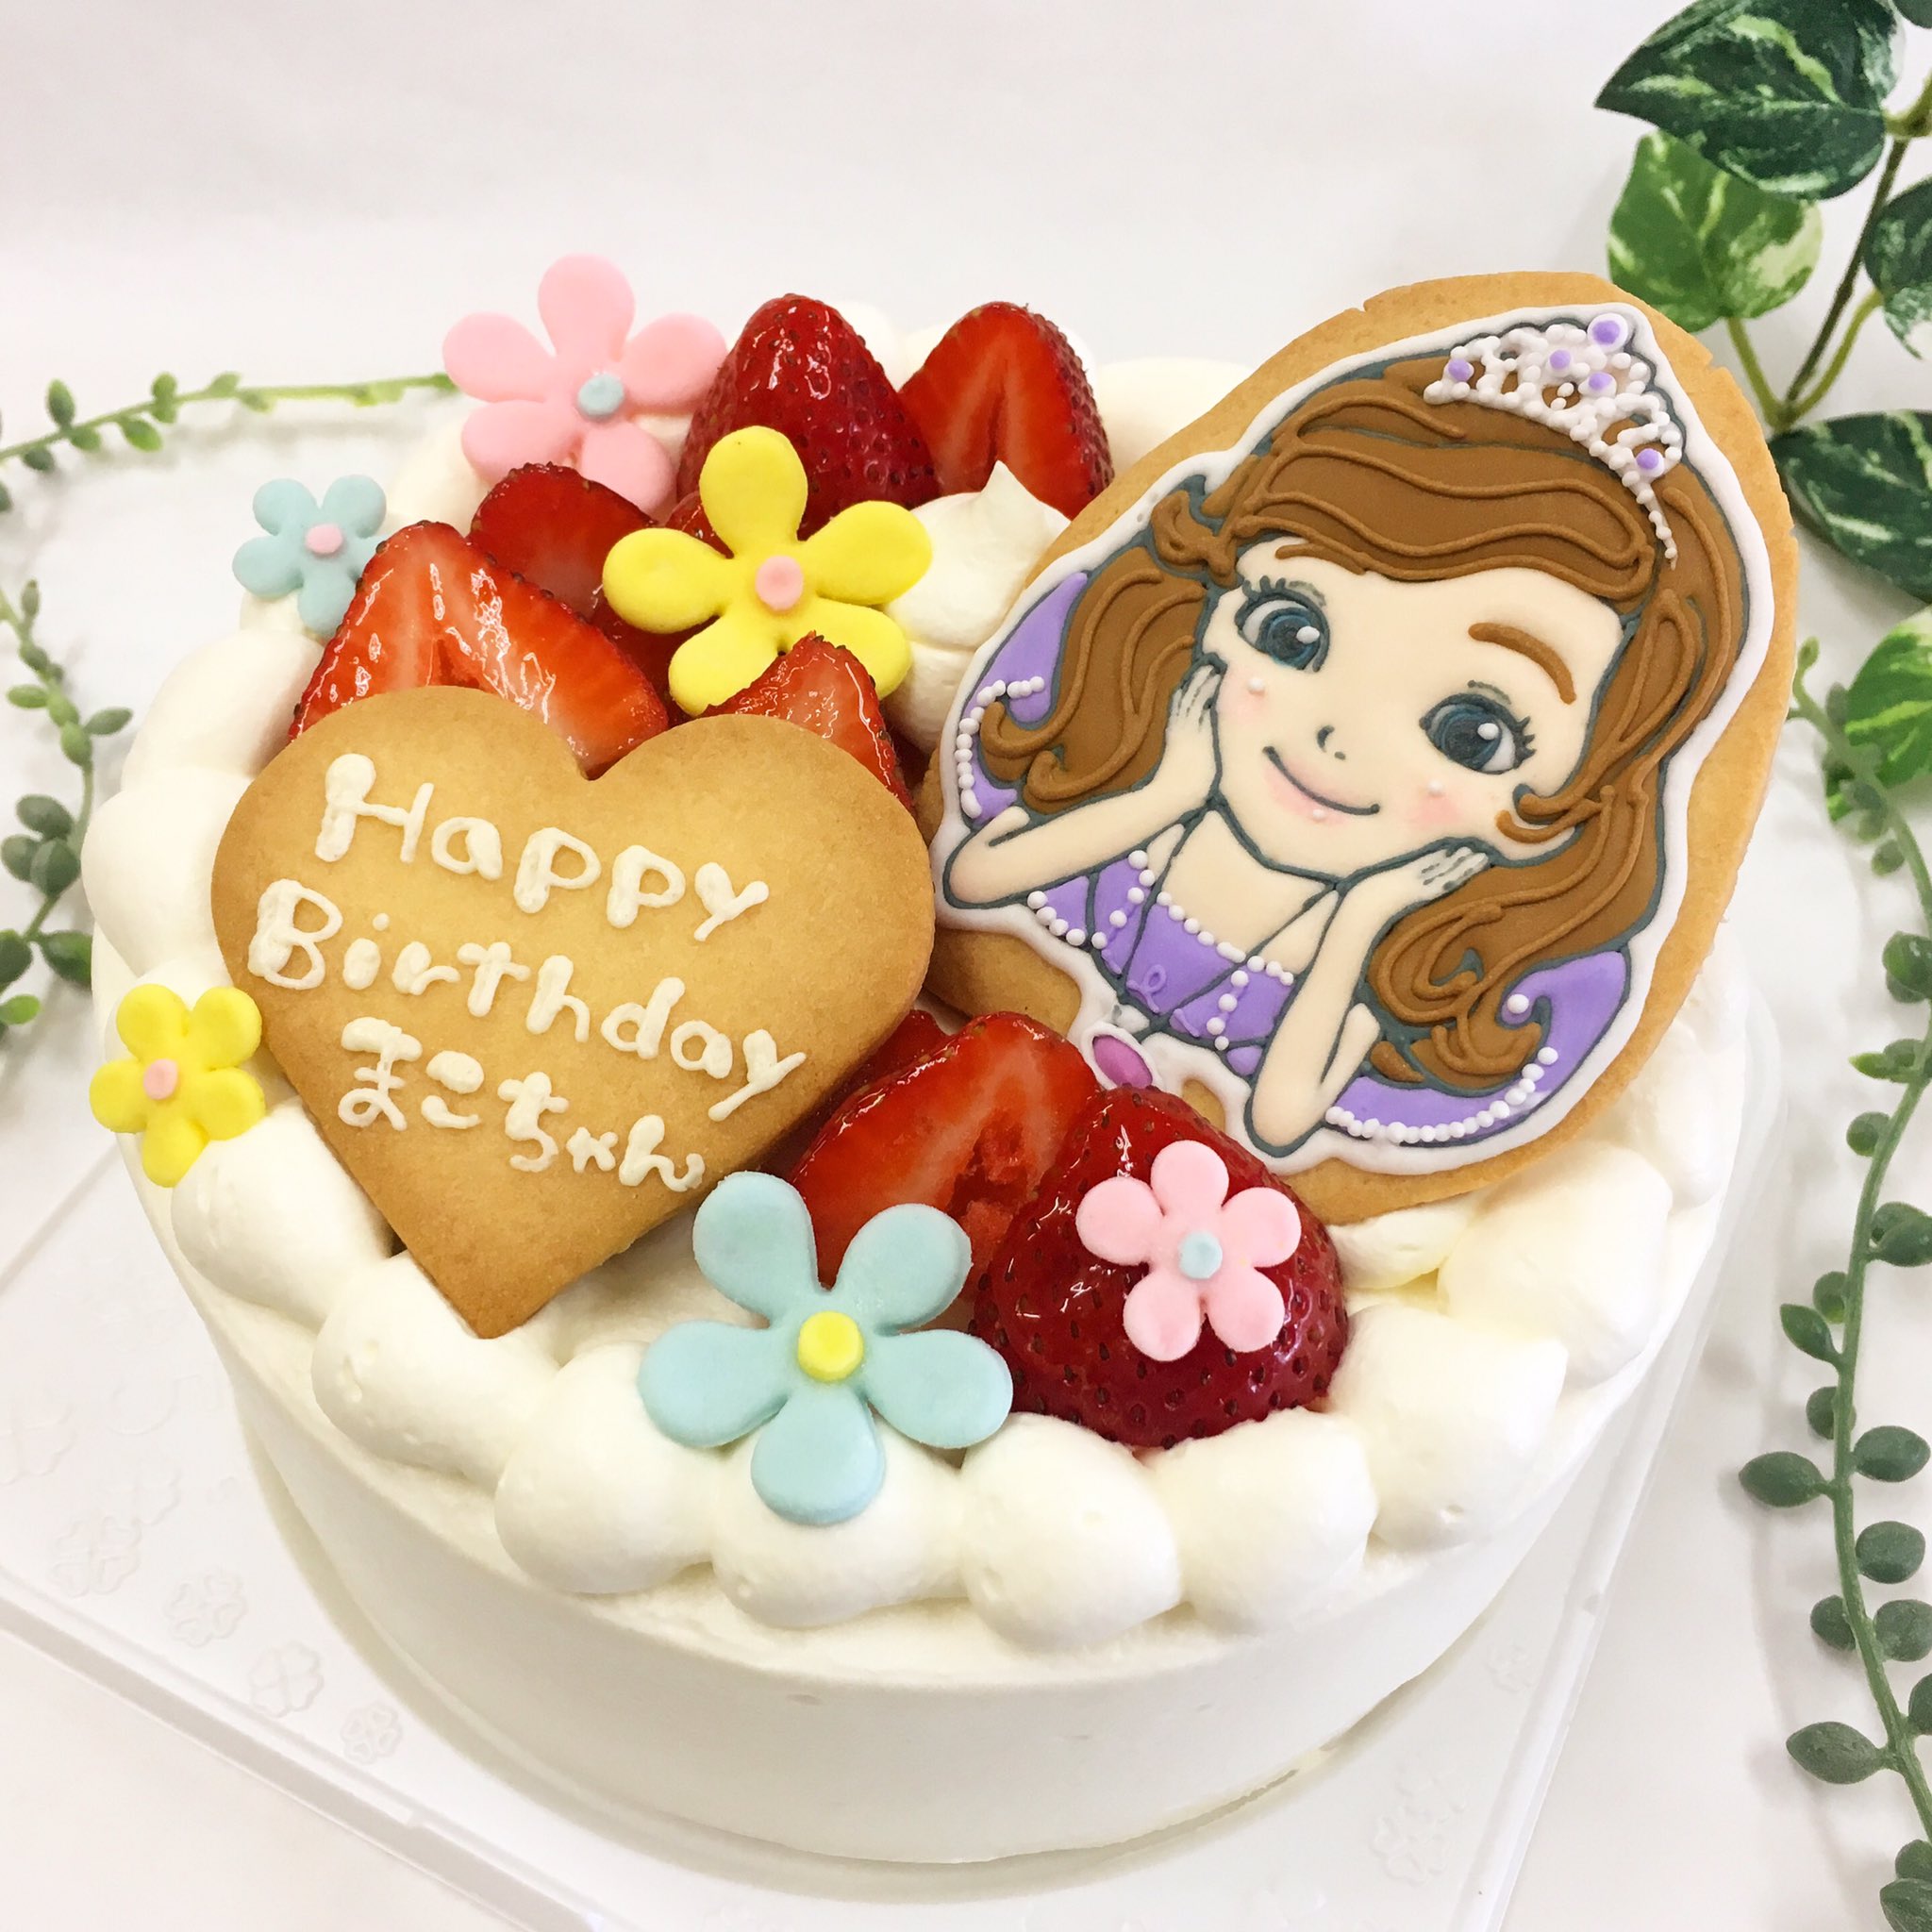 Twitter 上的 サン ヴェルジェ プリンセスソフィアのアイシングクッキー お花に囲まれてとっても可愛いケーキです ありがとうございました Saintverger サンヴェルジェ キャラクターケーキ アイシングクッキー プリンセスソフィア ソフィアケーキ